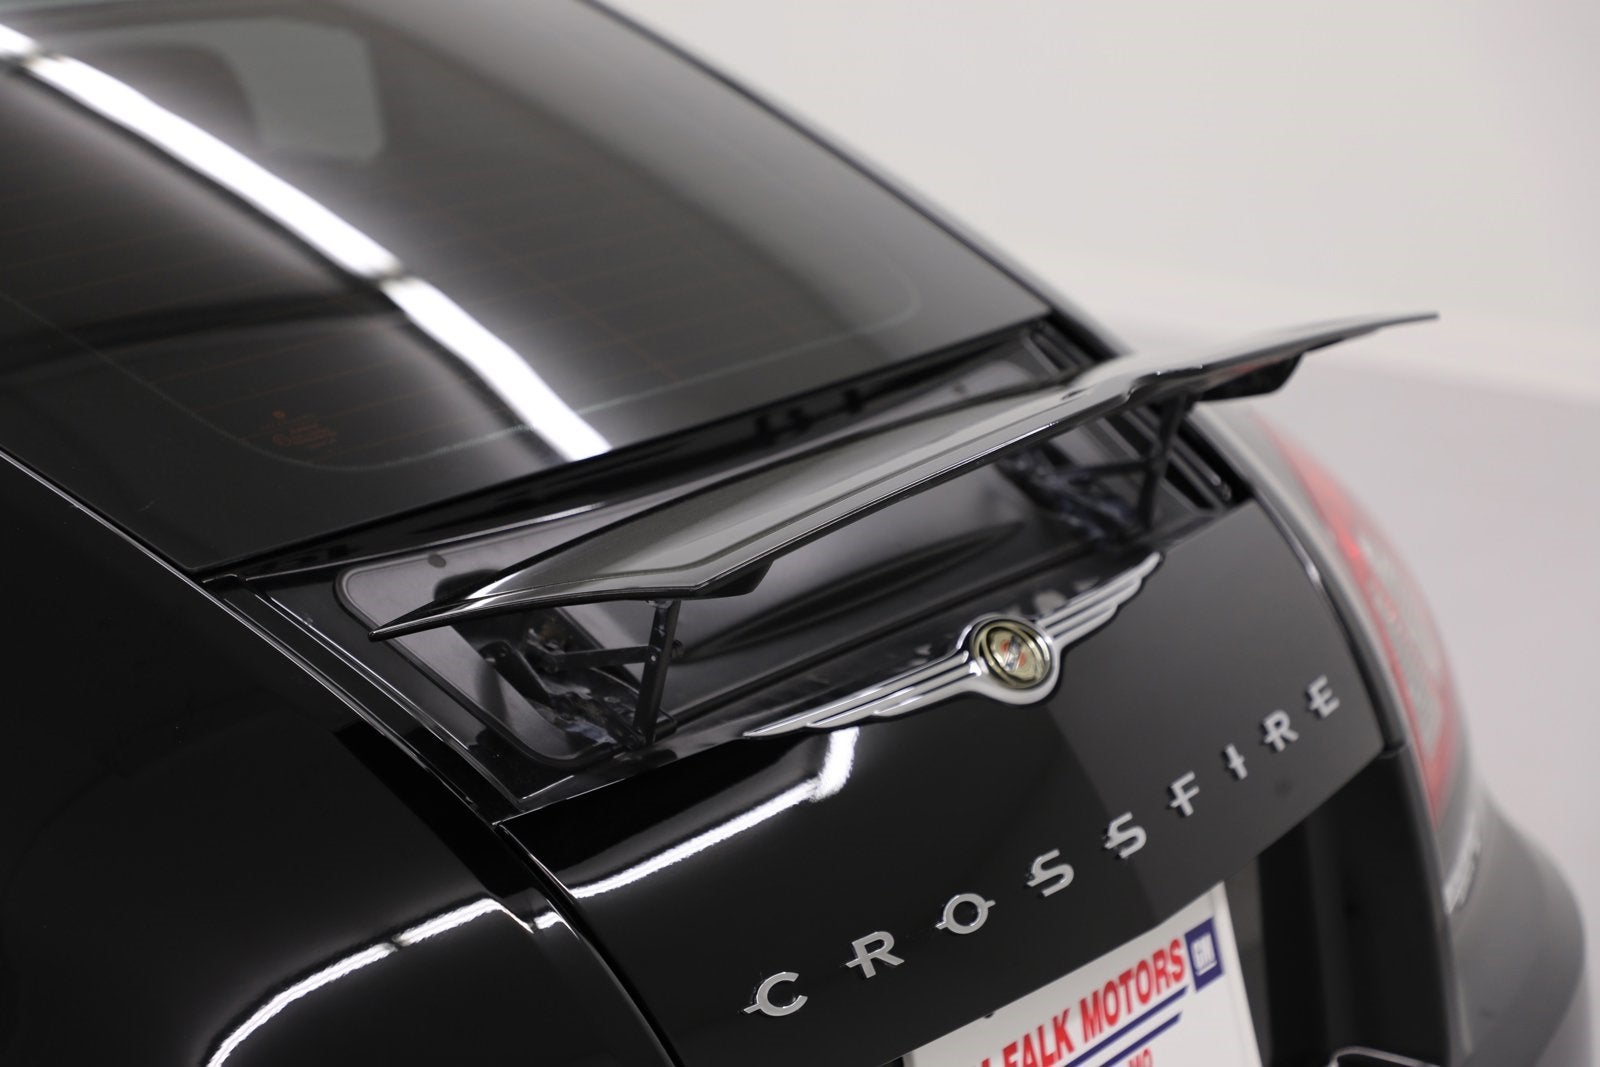 2007 Chrysler Crossfire Cruise Dual Zone AC 19 Inch Wheels Keyless Entry Power Windows Low Mileage Clean Carfax